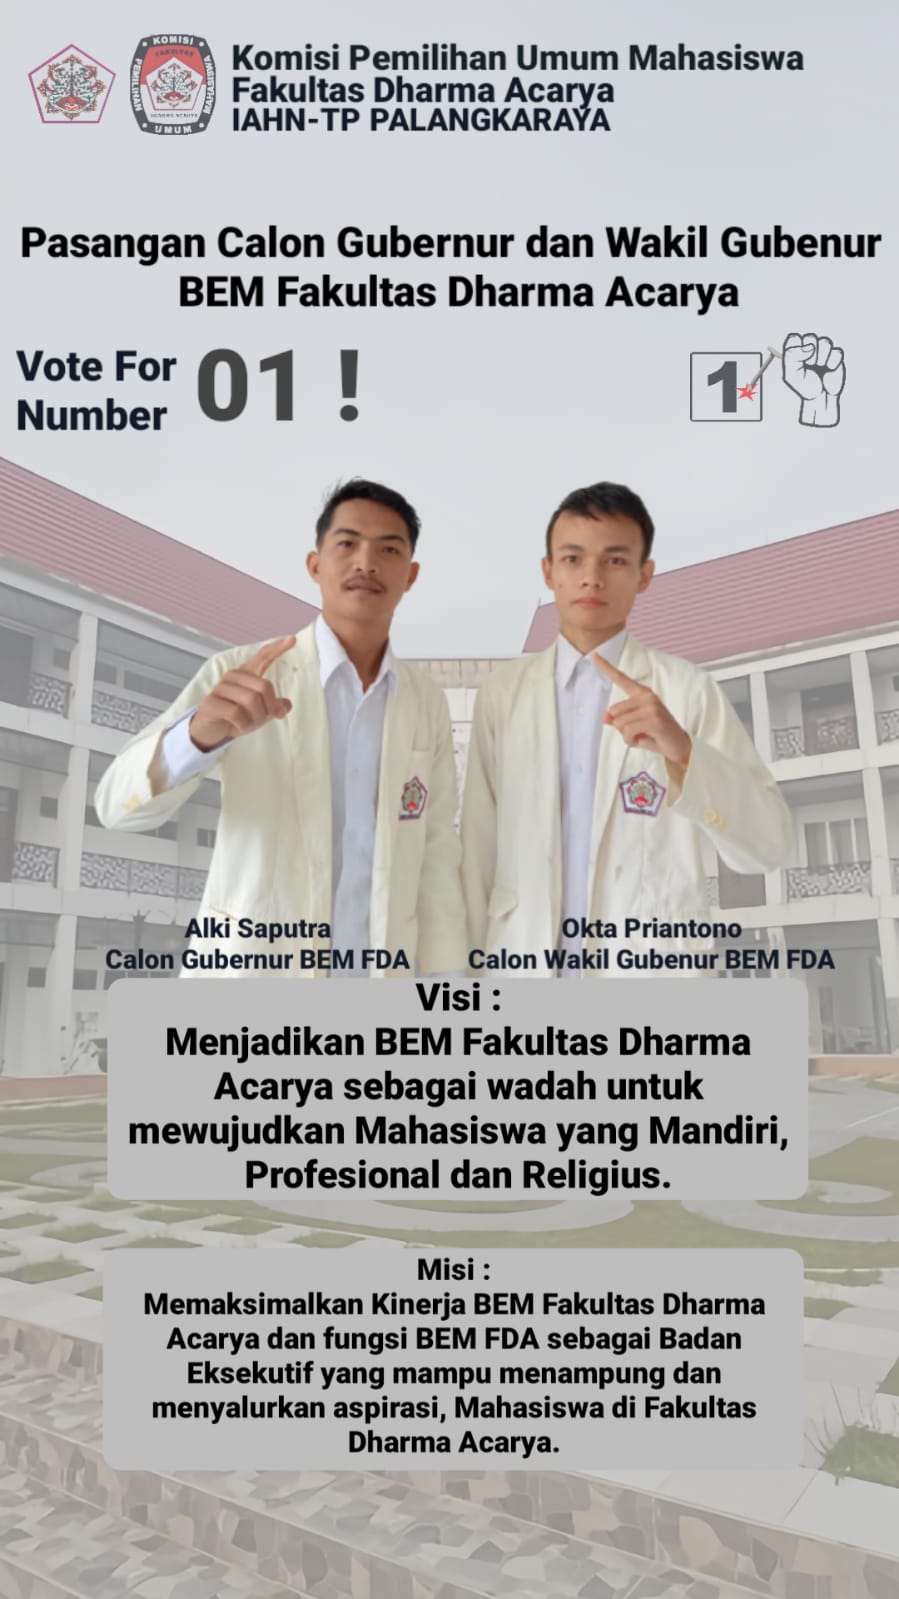 Alki Saputra dan Okta Priantono Maju Pemilihan Calon Gubernur dan Wakil Gubernur BEM FDA IAHN - TP Palangka Raya